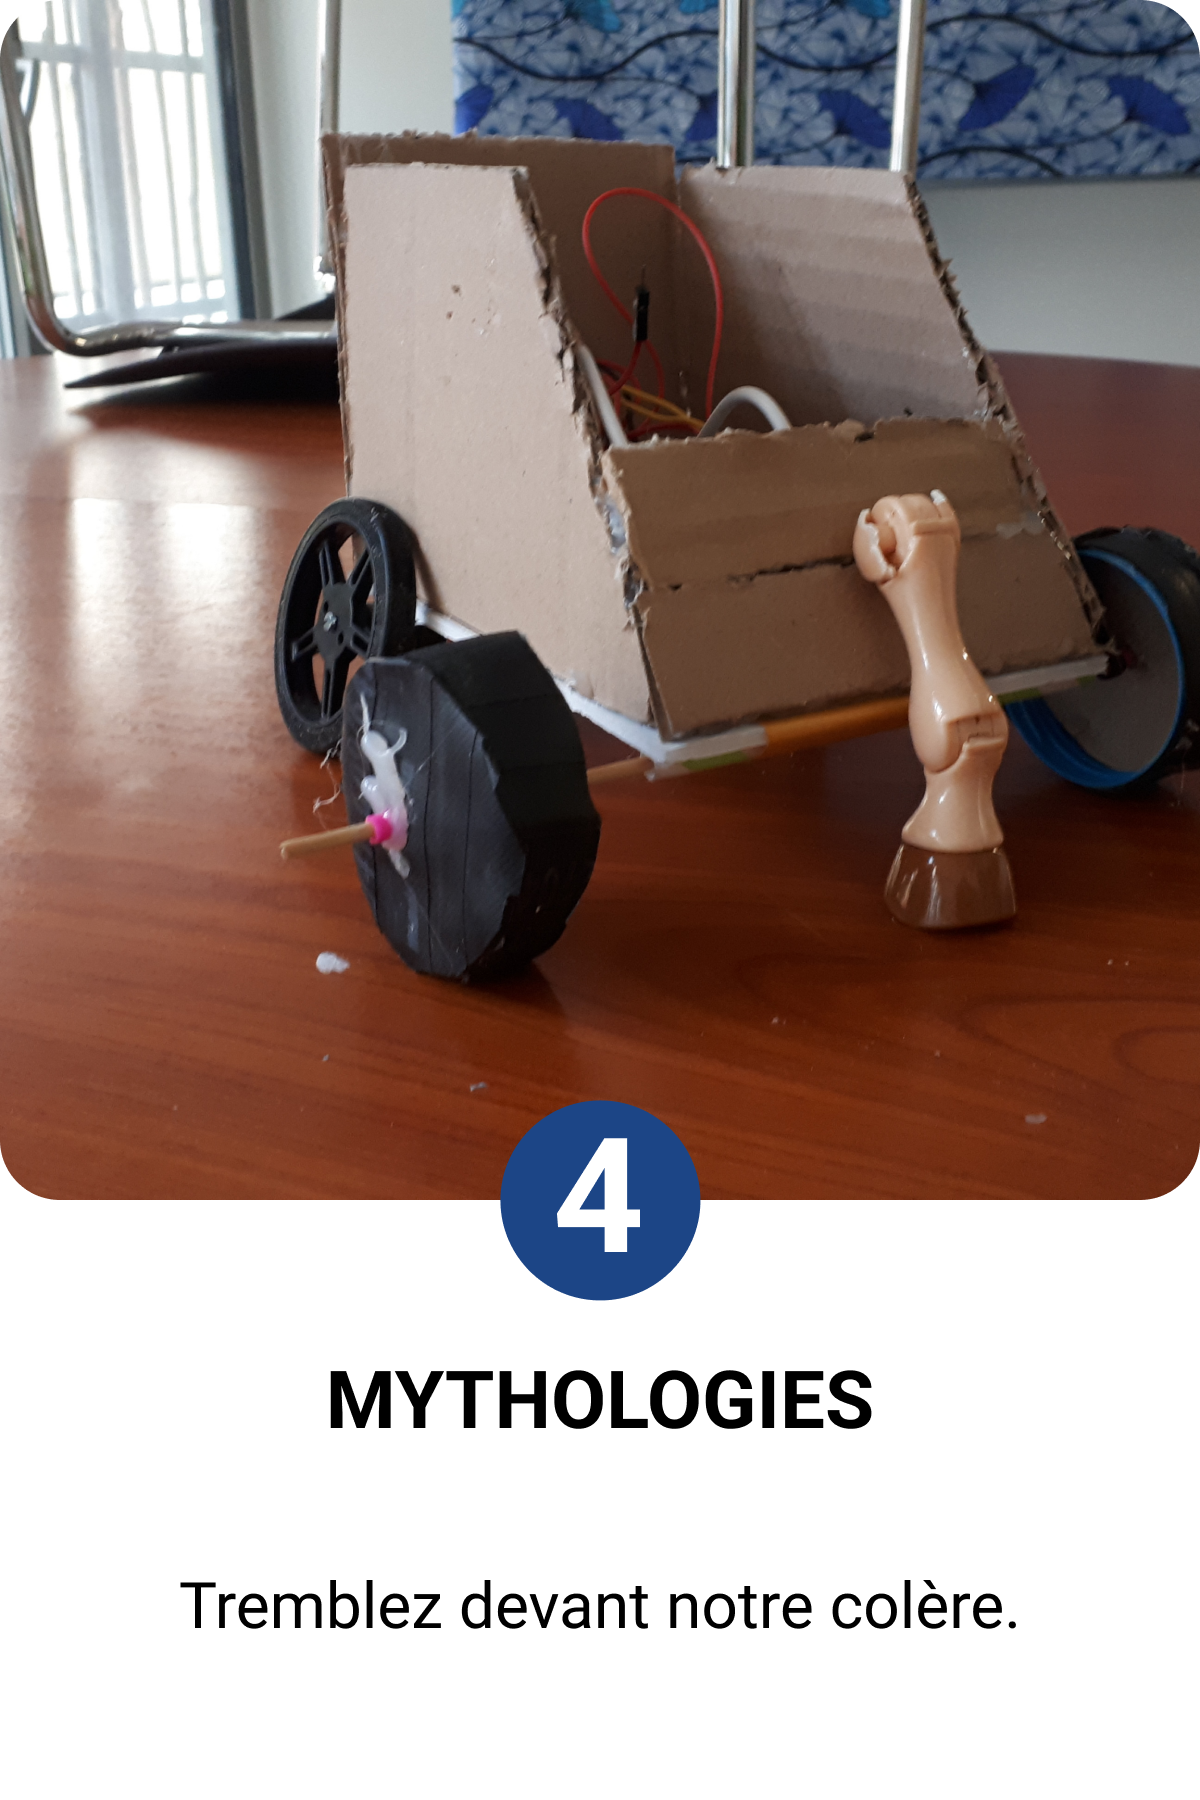 Mythologies de robots sportifs